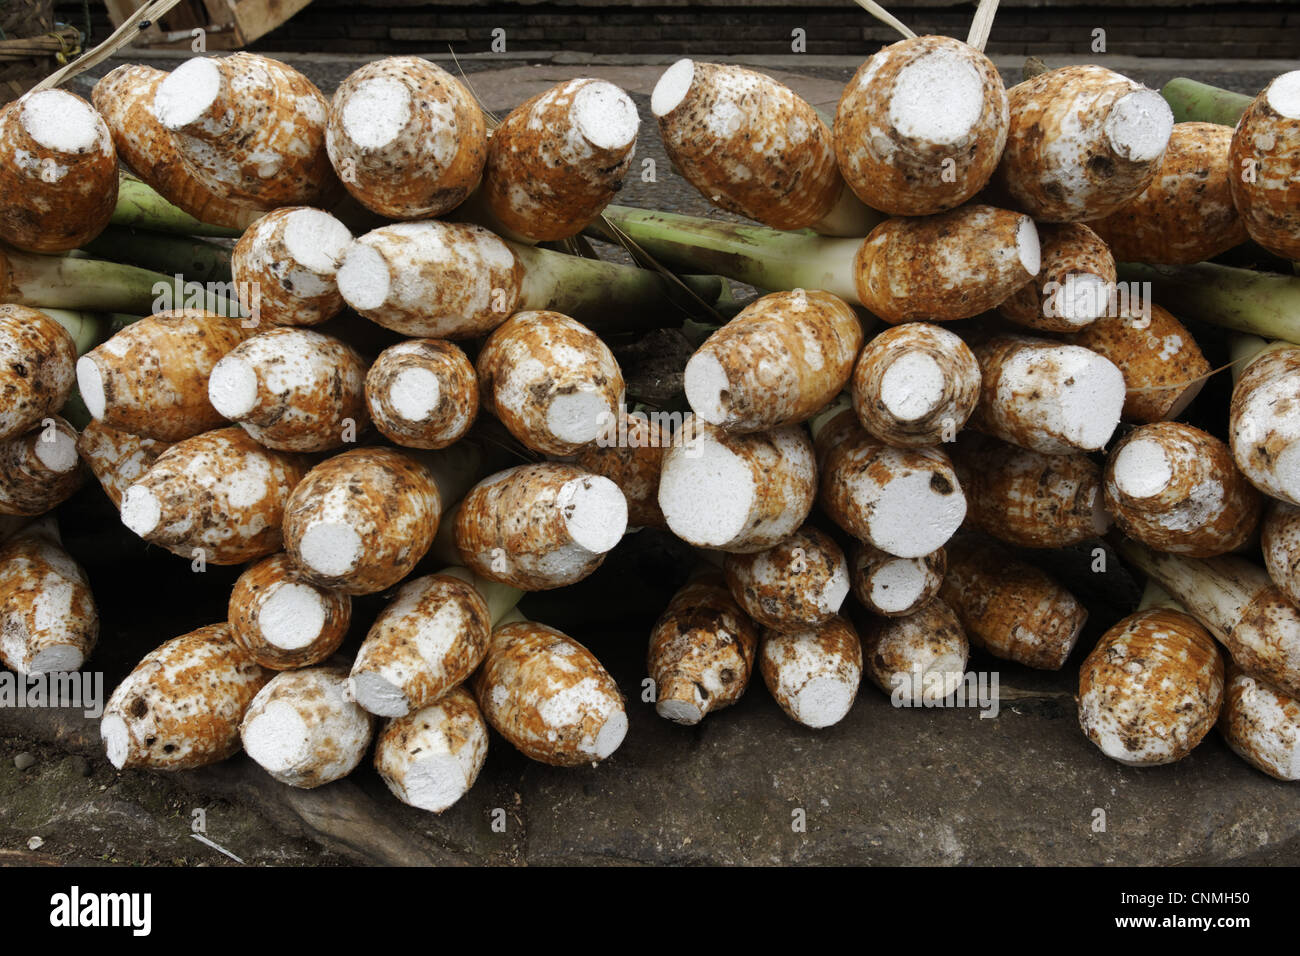 Keladi Tikus Typhonium Flagelliforme Harvested Root Crop For Sale At Market Indonesia March Stock Photo Alamy